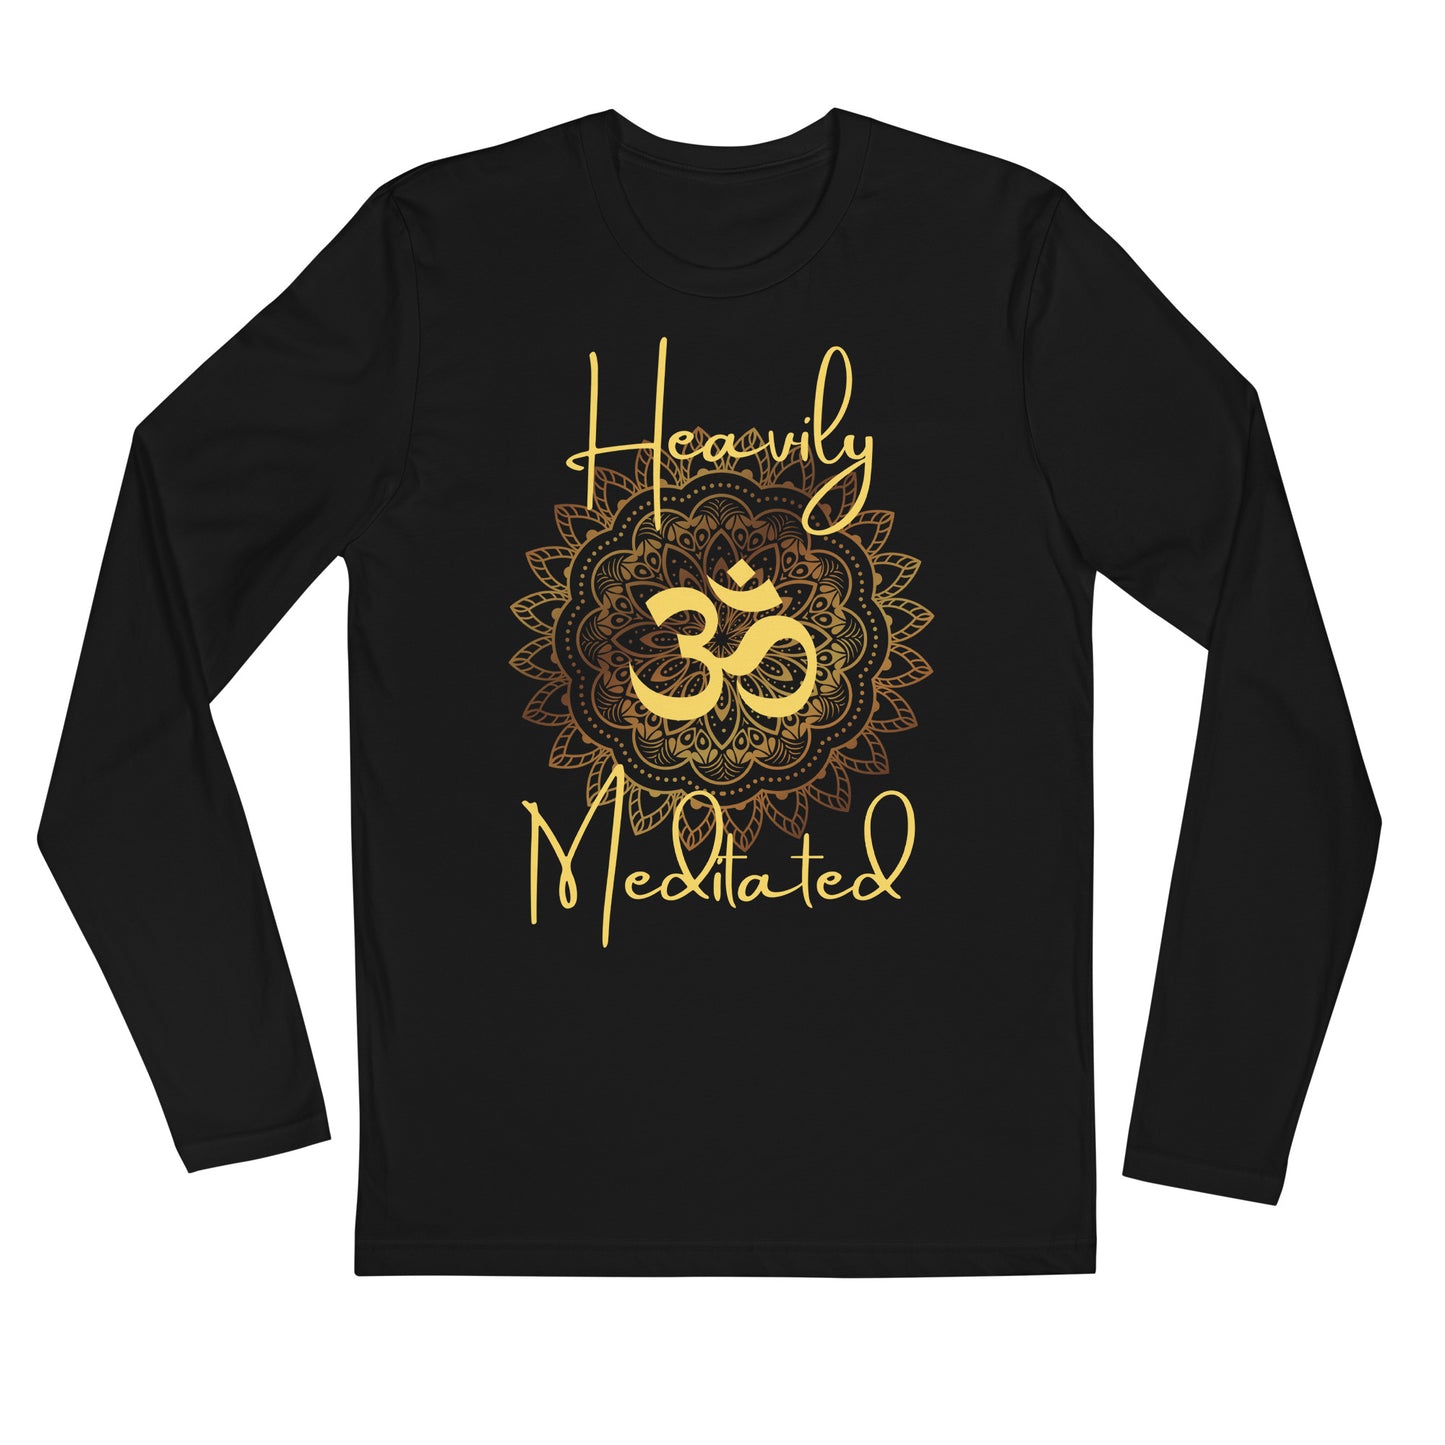 Graphic Print Tee - Heavily Ohm Meditated - Golden Mandala - Long Sleeve Unisex T-Shirt